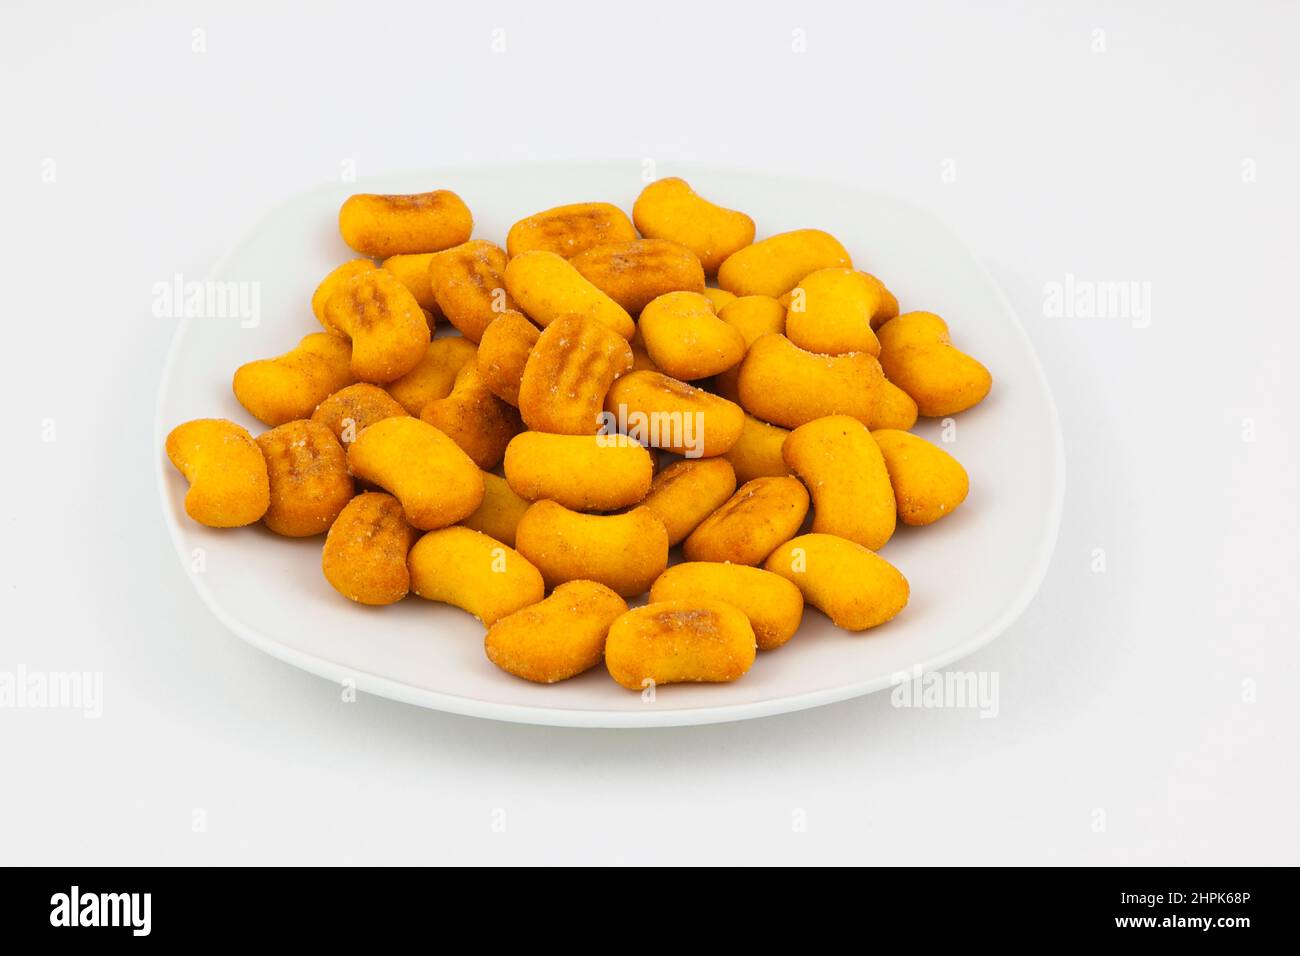 Food, Snacks, Crunchy baked wheat cheese flavoured bitesize shapes. Stock Photo